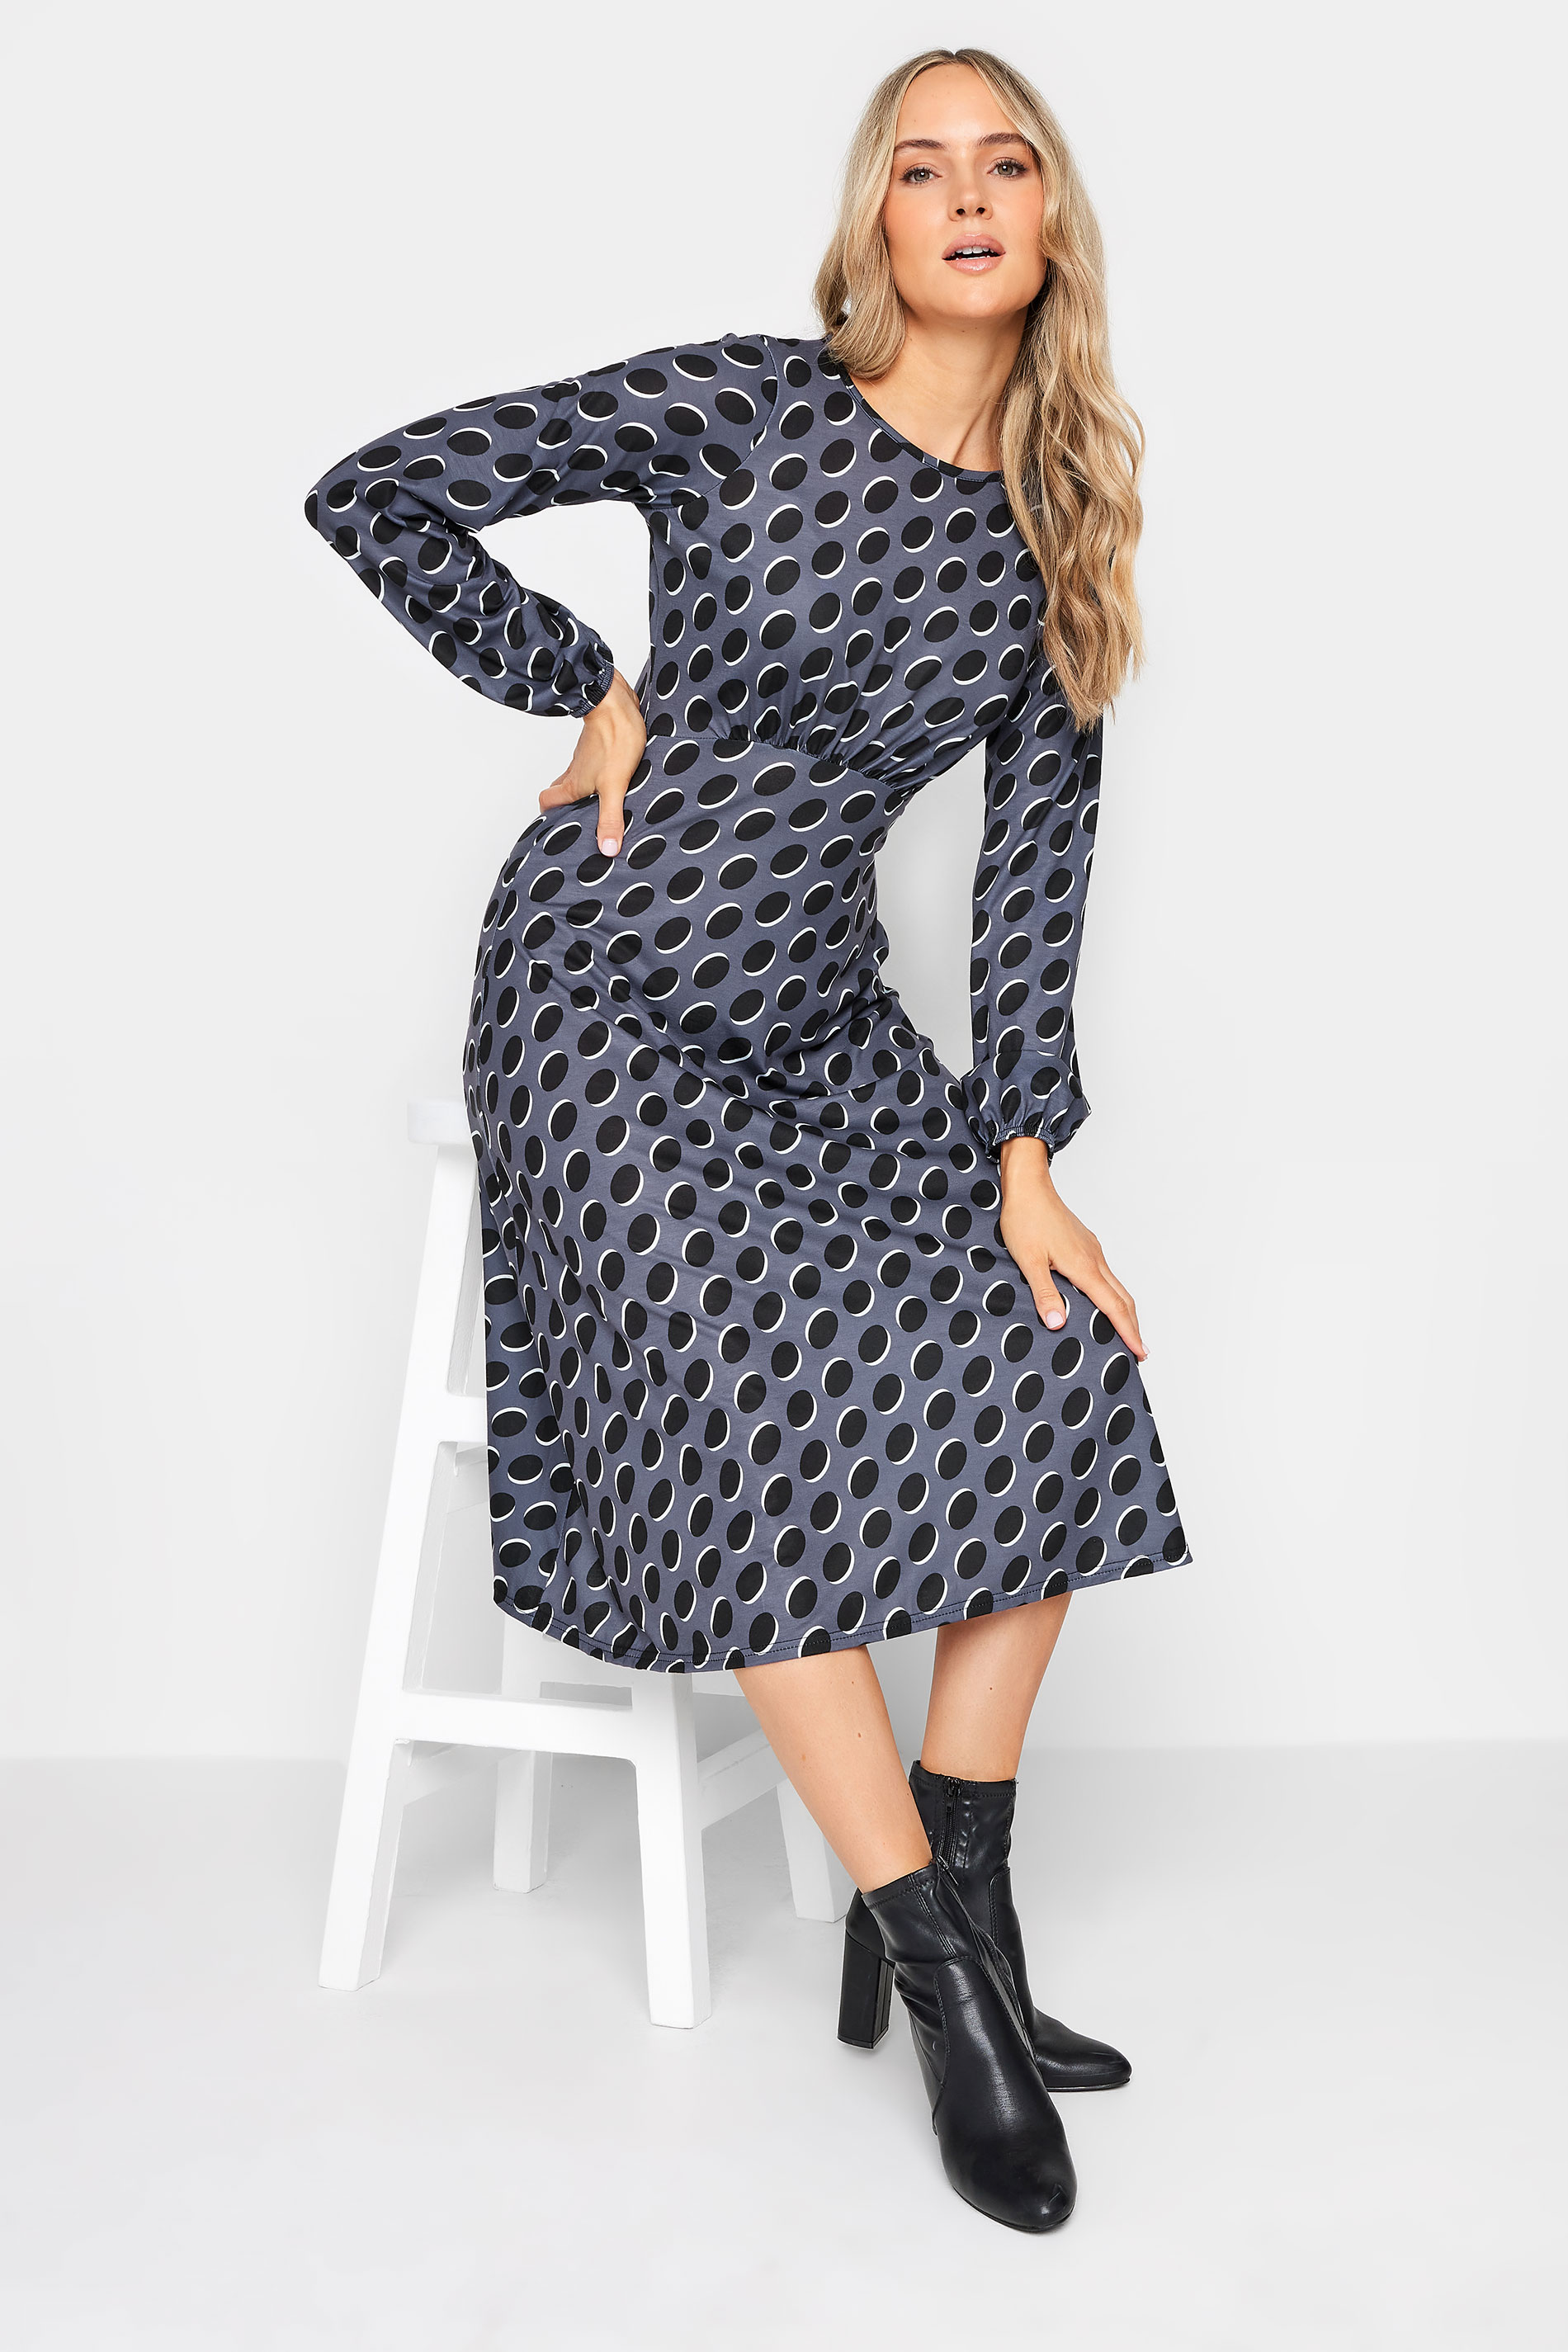 LTS Tall Charcoal Grey Spot Print Dress | Long Tall Sally 1